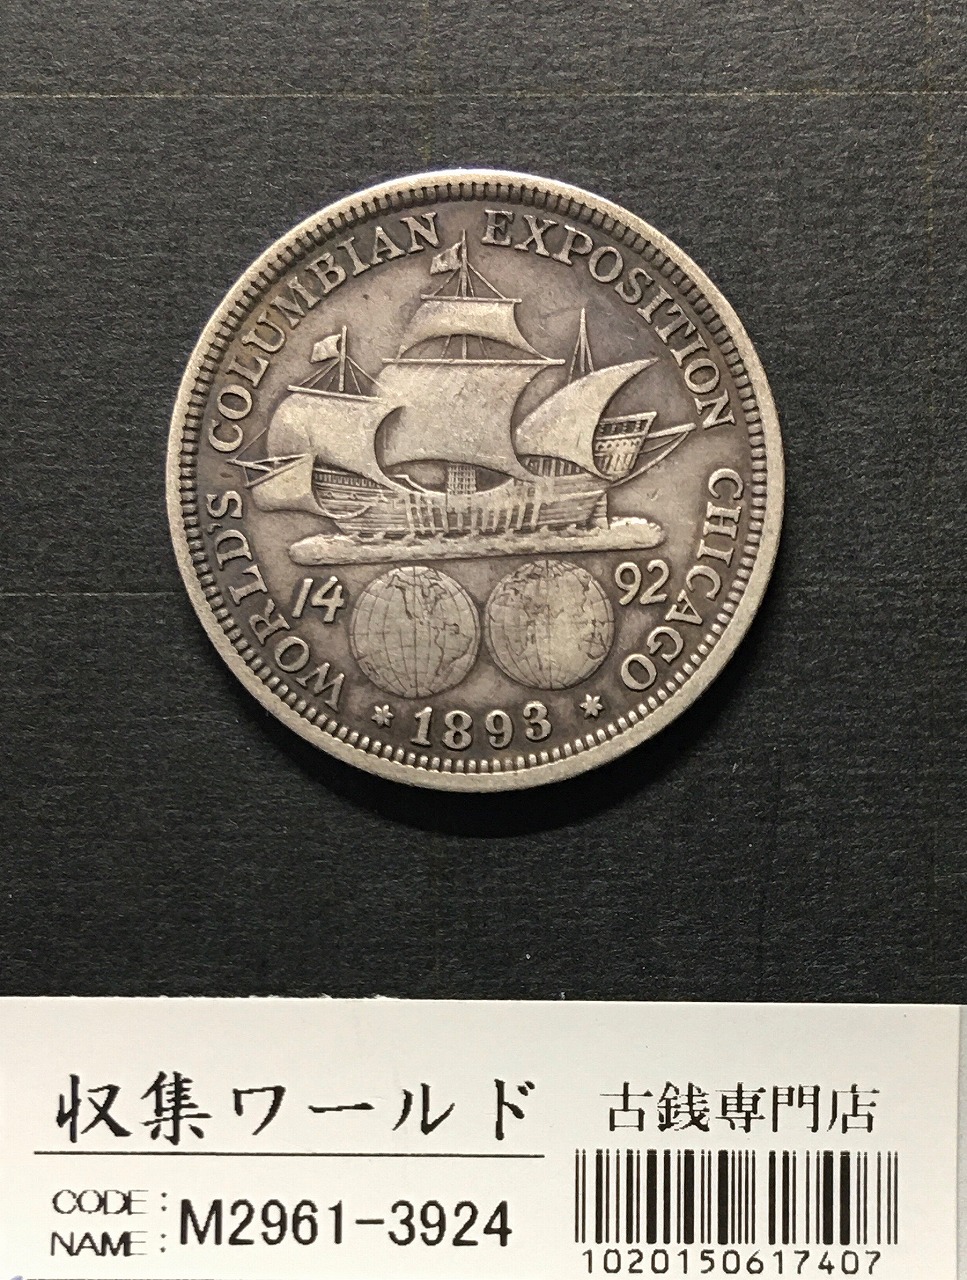 USA 50セント銀貨1893年銘 シカゴバンコク博覧会/コロンブス航海記念銀貨 極美品 | 収集ワールド